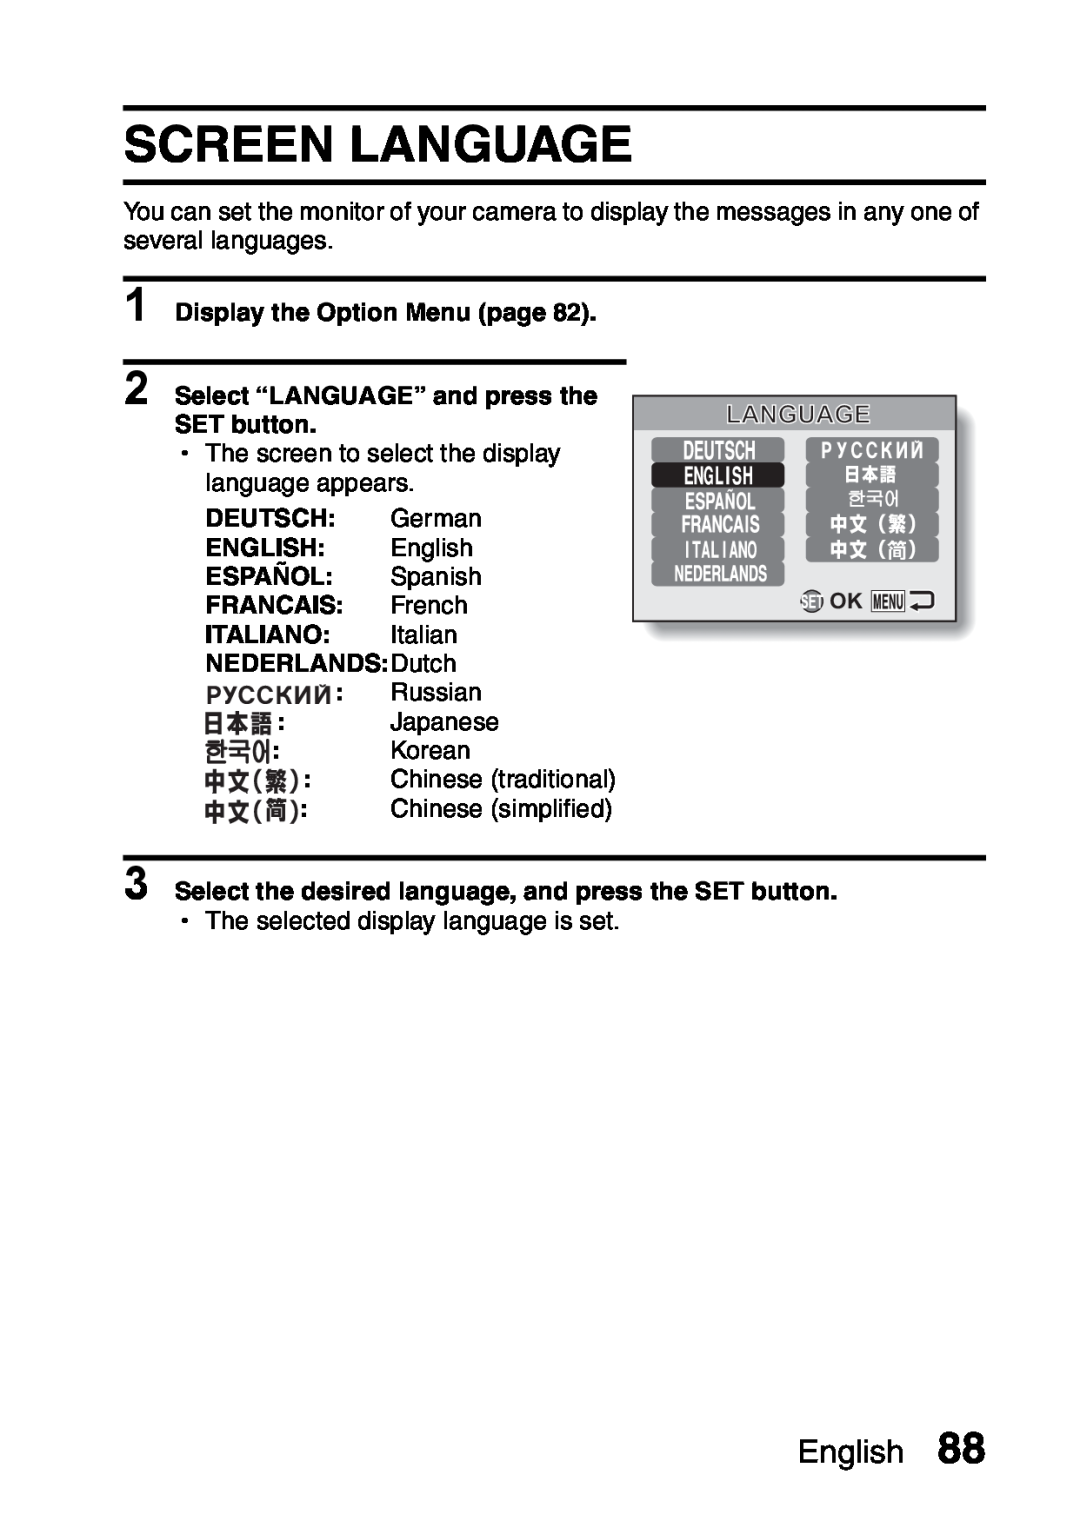 Sanyo VPC-S60 Screen Language, Select “LANGUAGE” and press the SET button, ITALIANO Italian NEDERLANDSDutch, Russian 